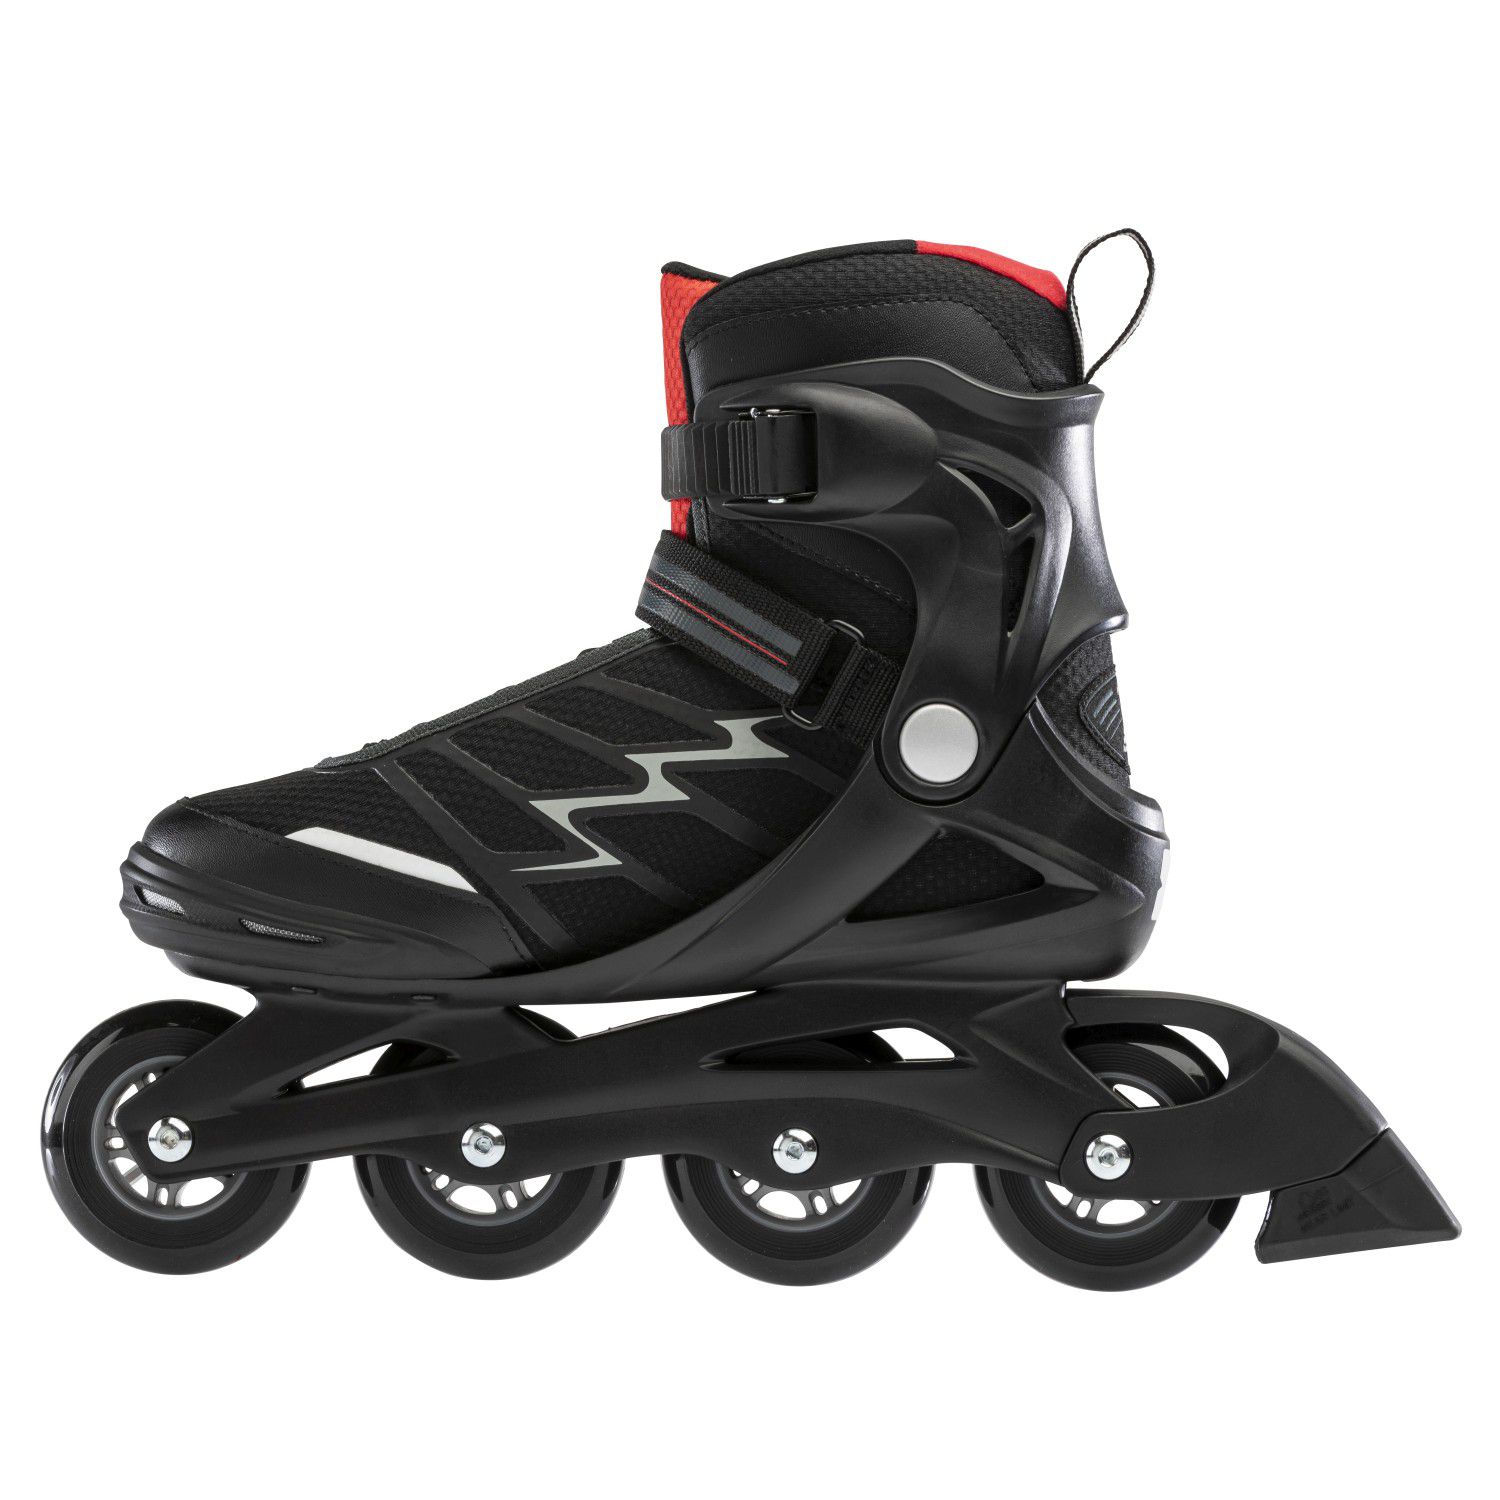 Skate Rollerblade Advantage Pro Xt